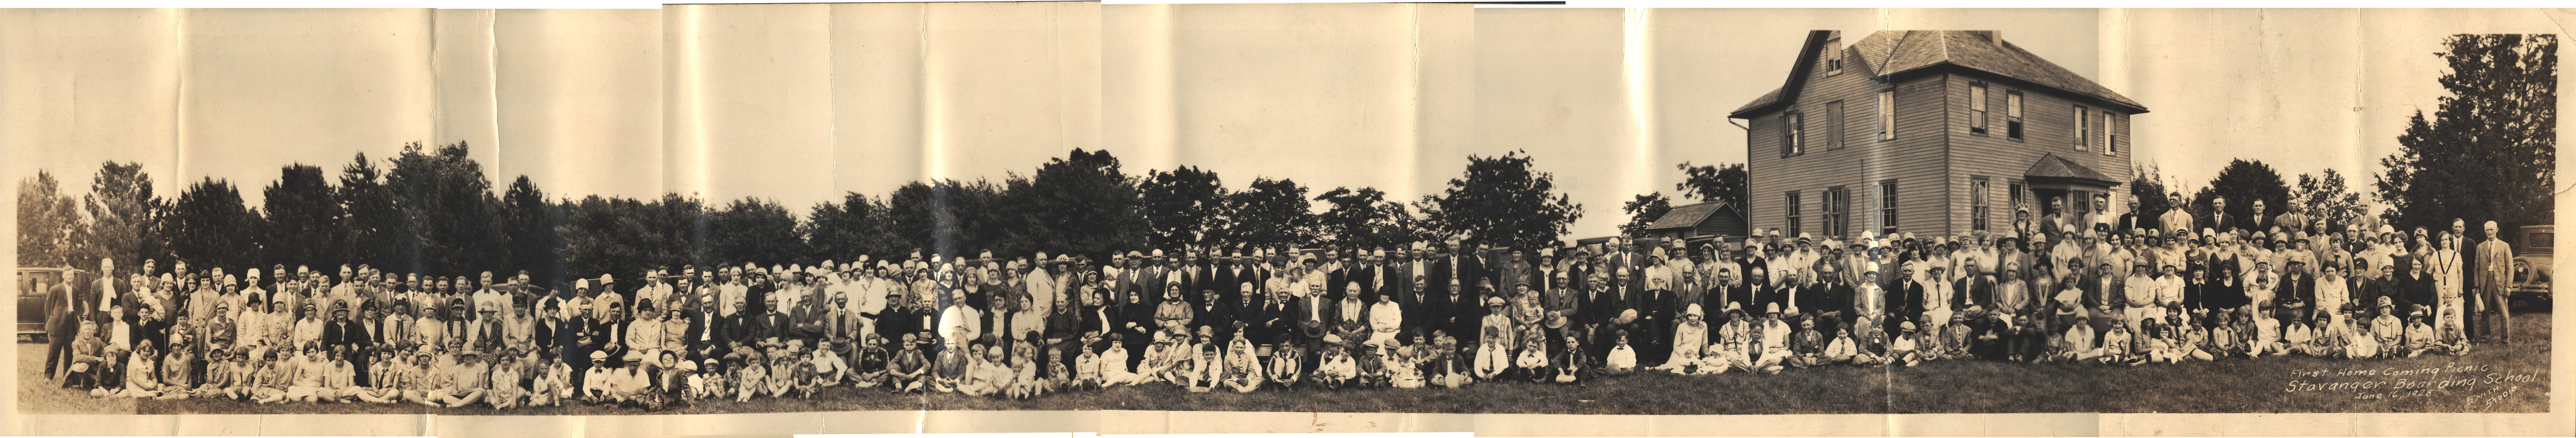 Stavanger Boarding School First Homecoming Picnic June 16, 1928